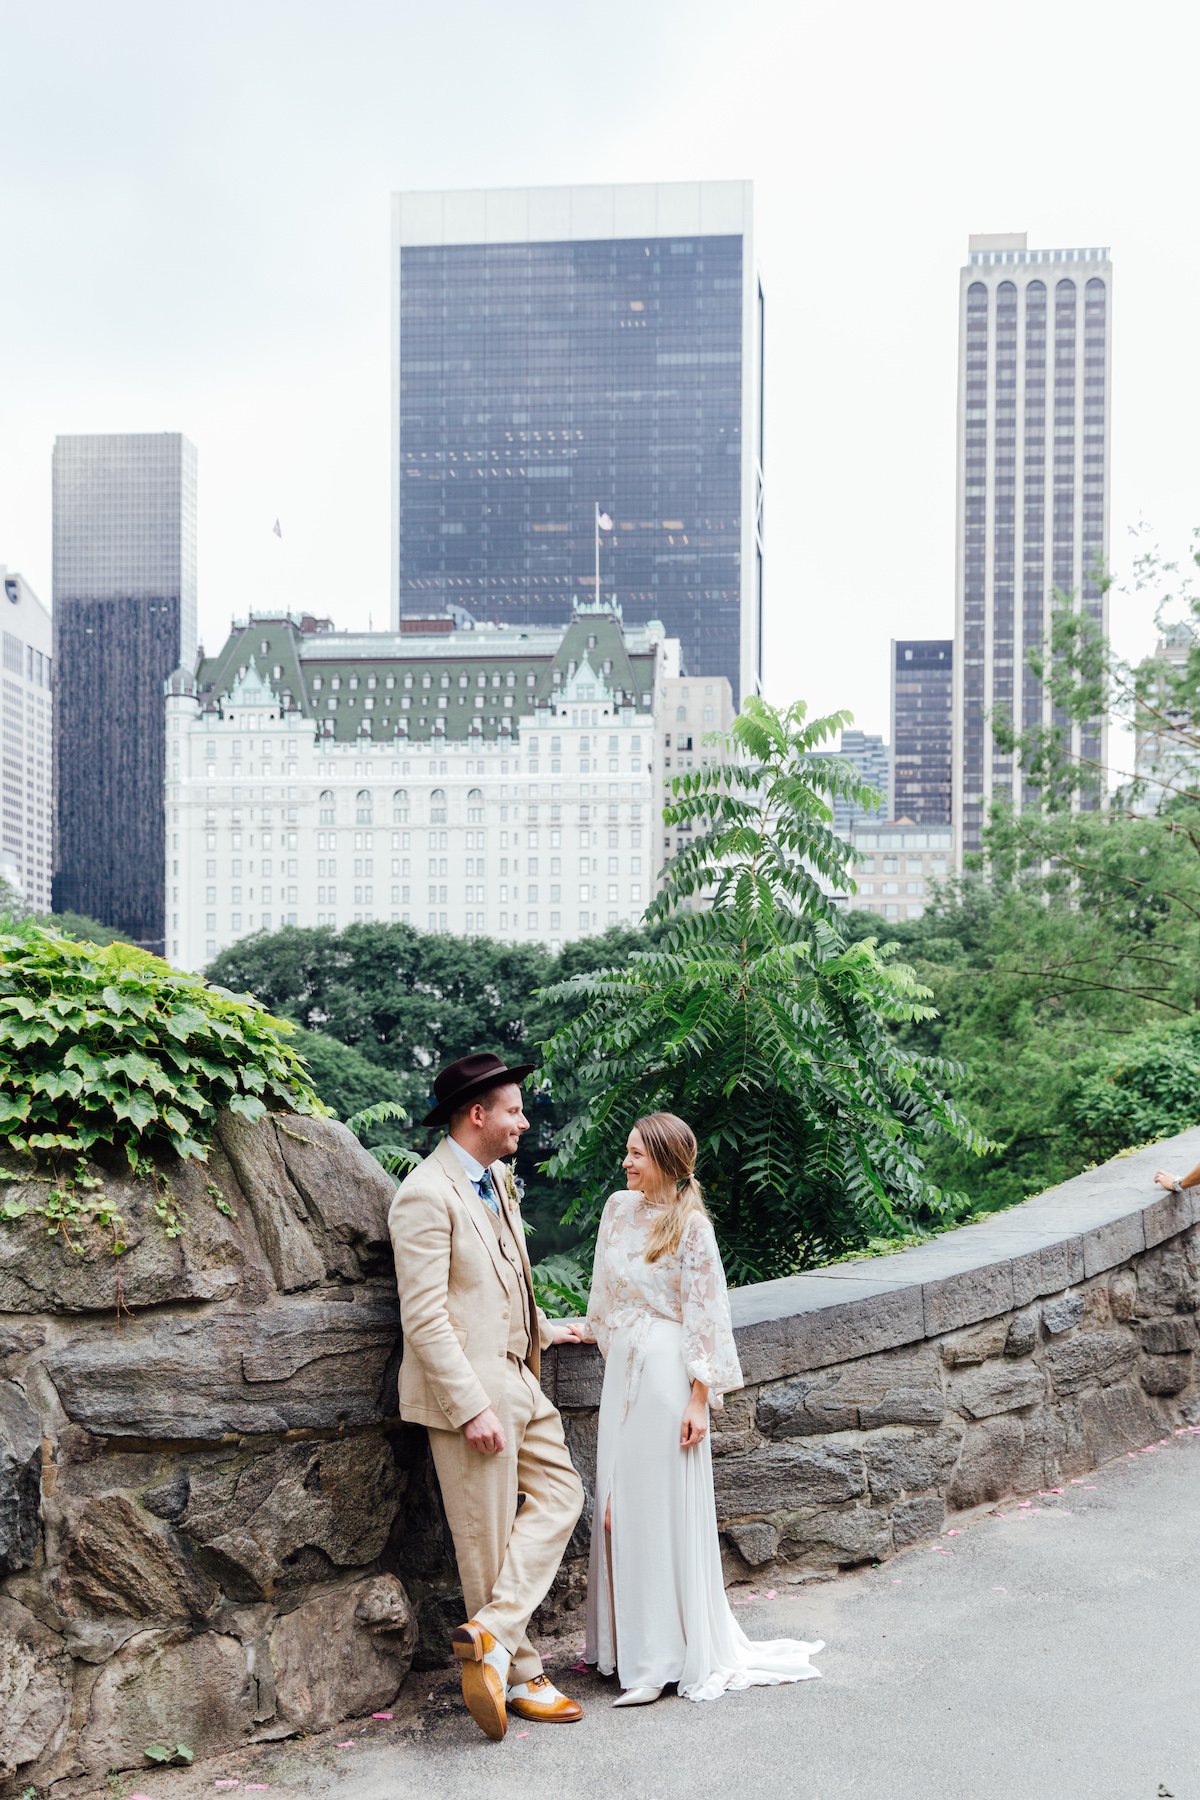 Wed in Central Park19.jpg